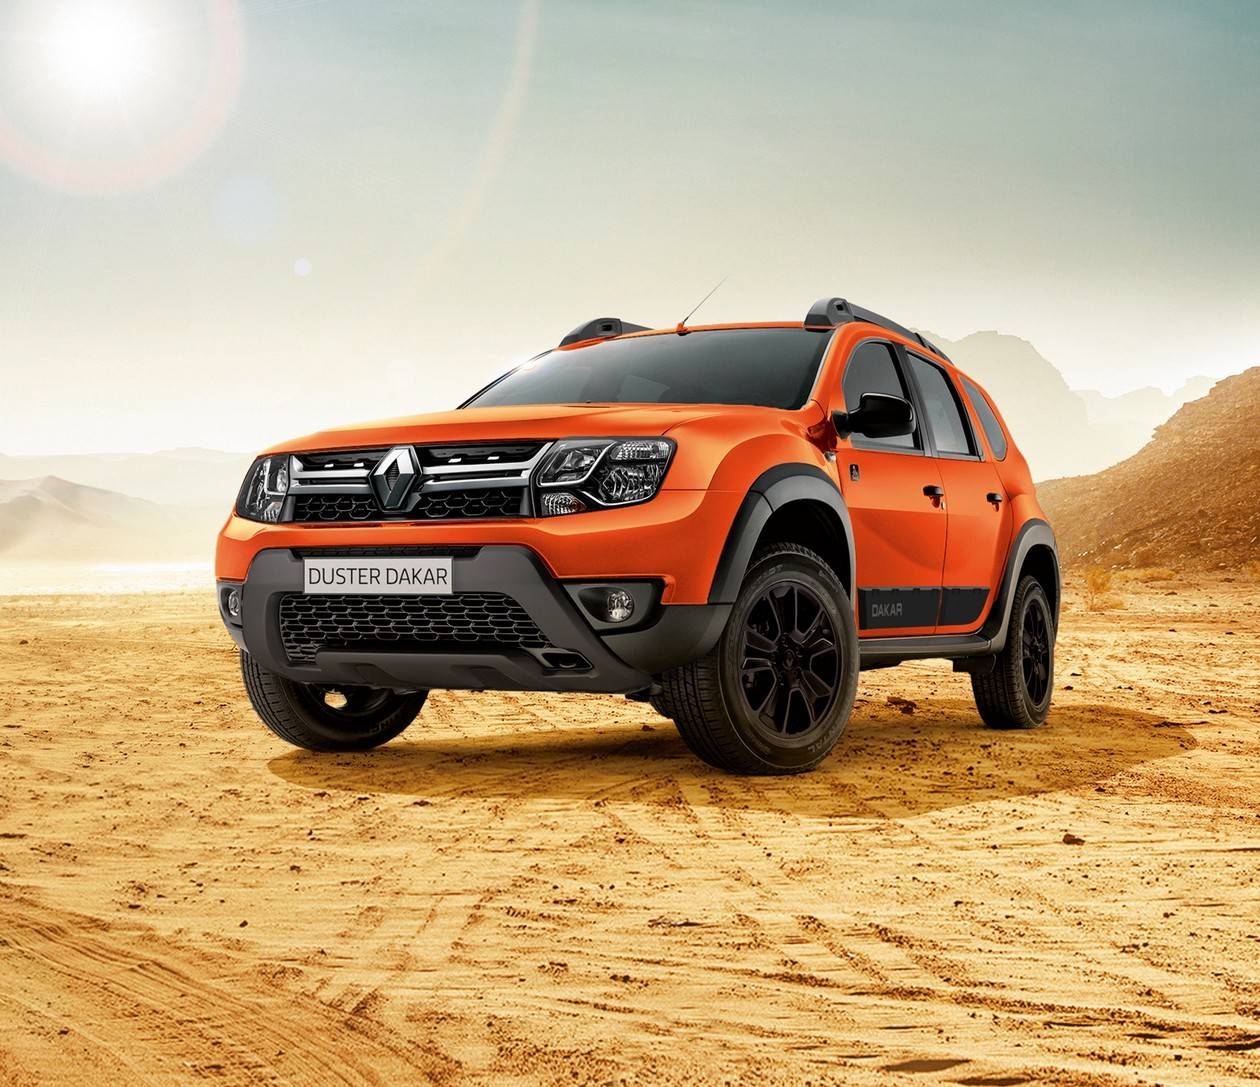 Renault Duster Dakar Edition фото цена характеристики